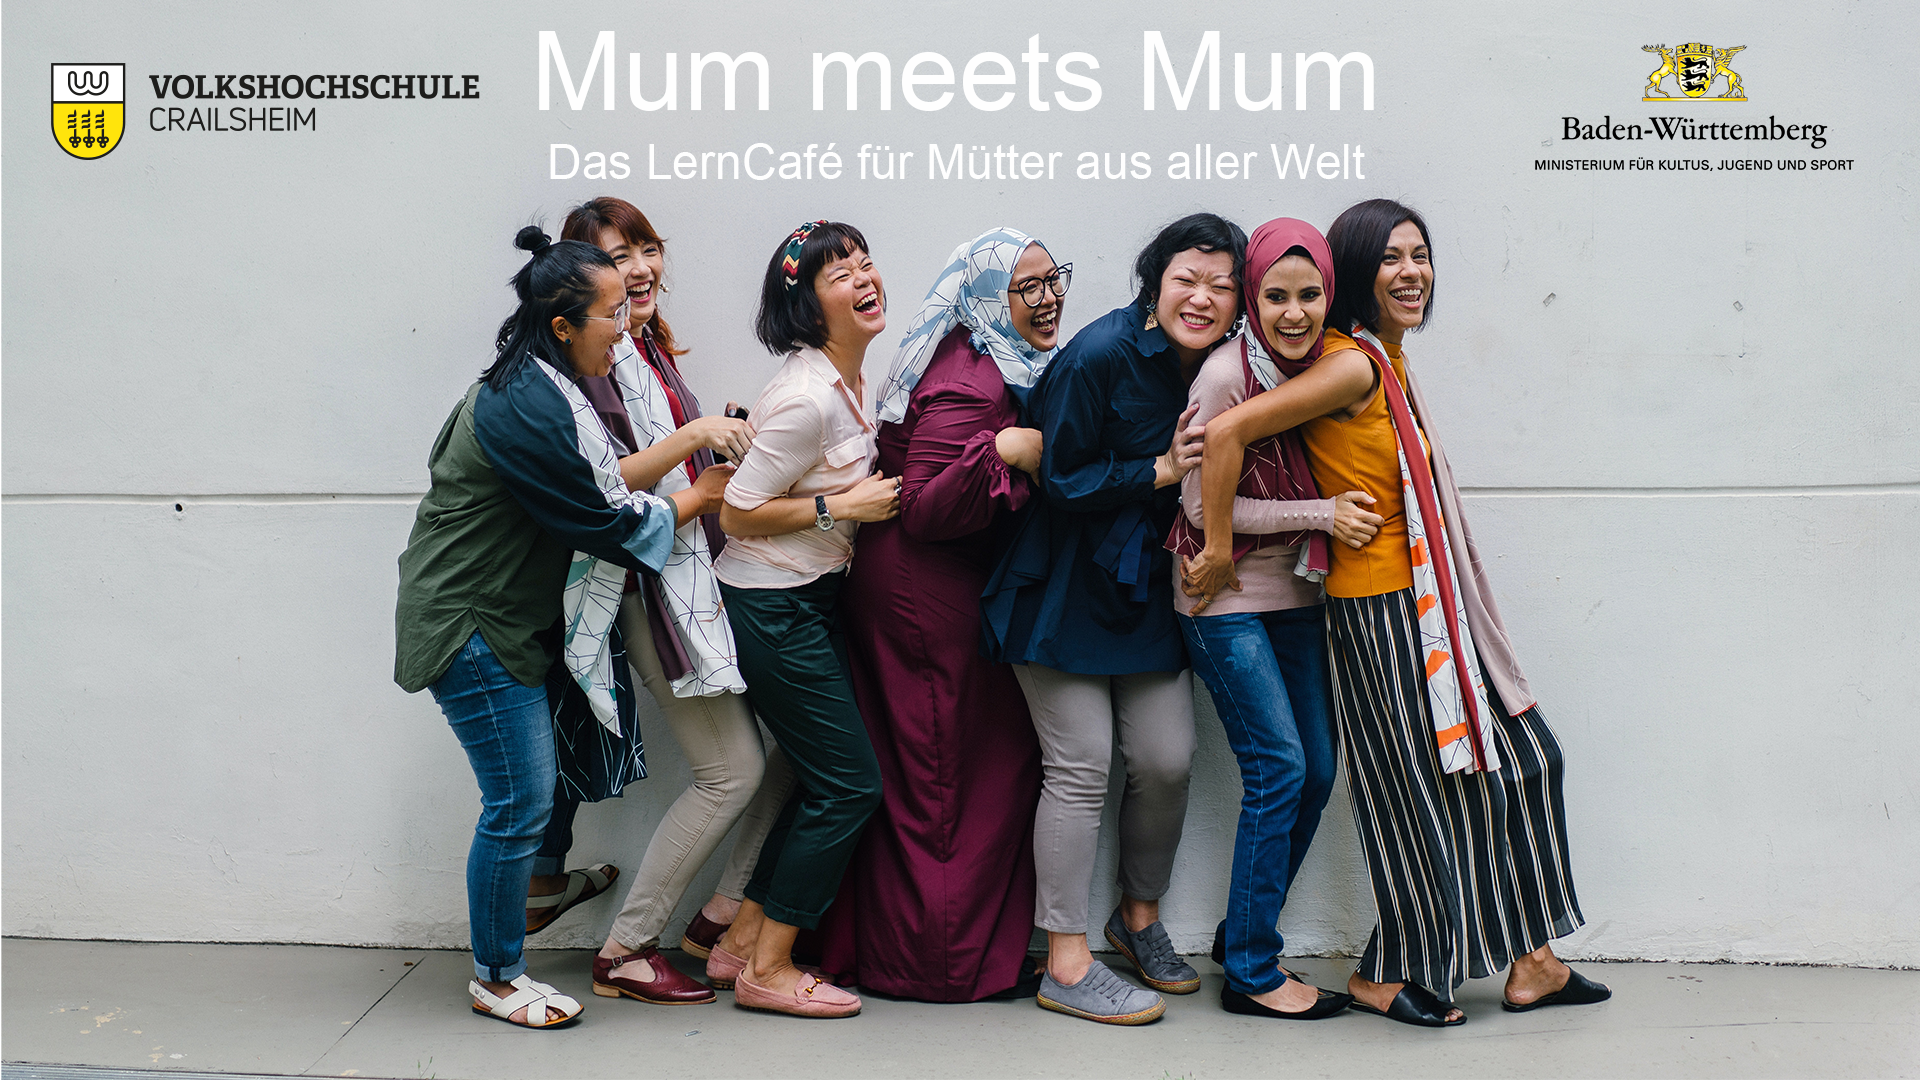 Foto: Plakat Integrationsprojekt "Mum meets Mum" an der vhs Crailsheim mit Frauen aus verschiedenen Ländern